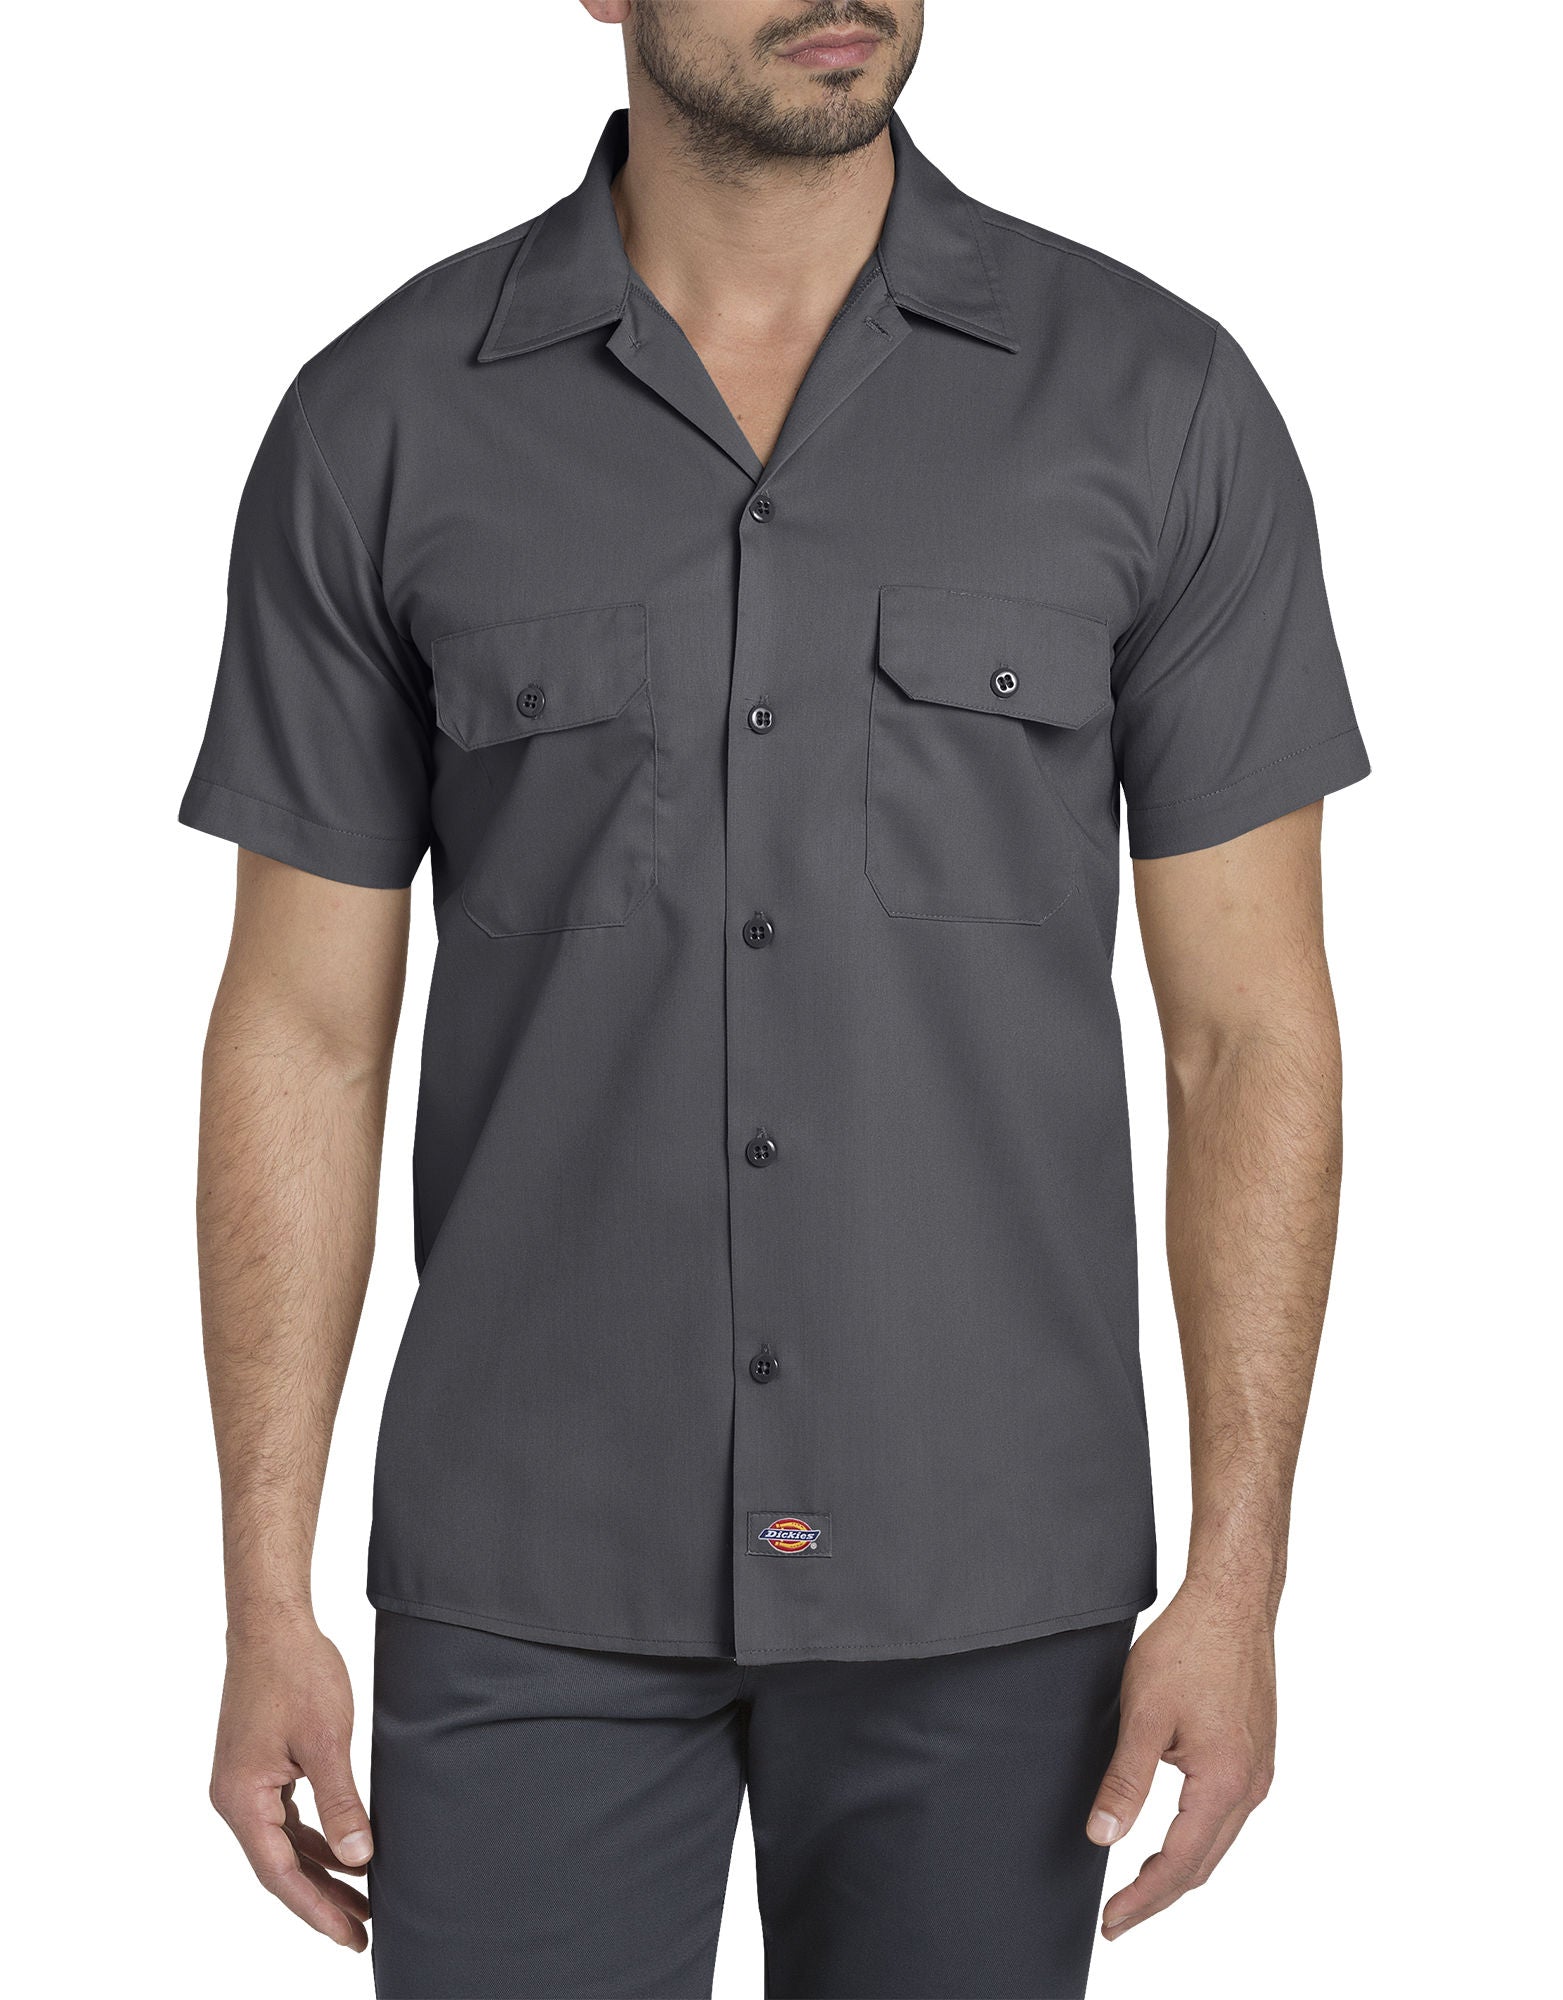 DIC-WS673 - Dickies Mens FLEX Slim Fit Short Sleeve Twill Work Shirt